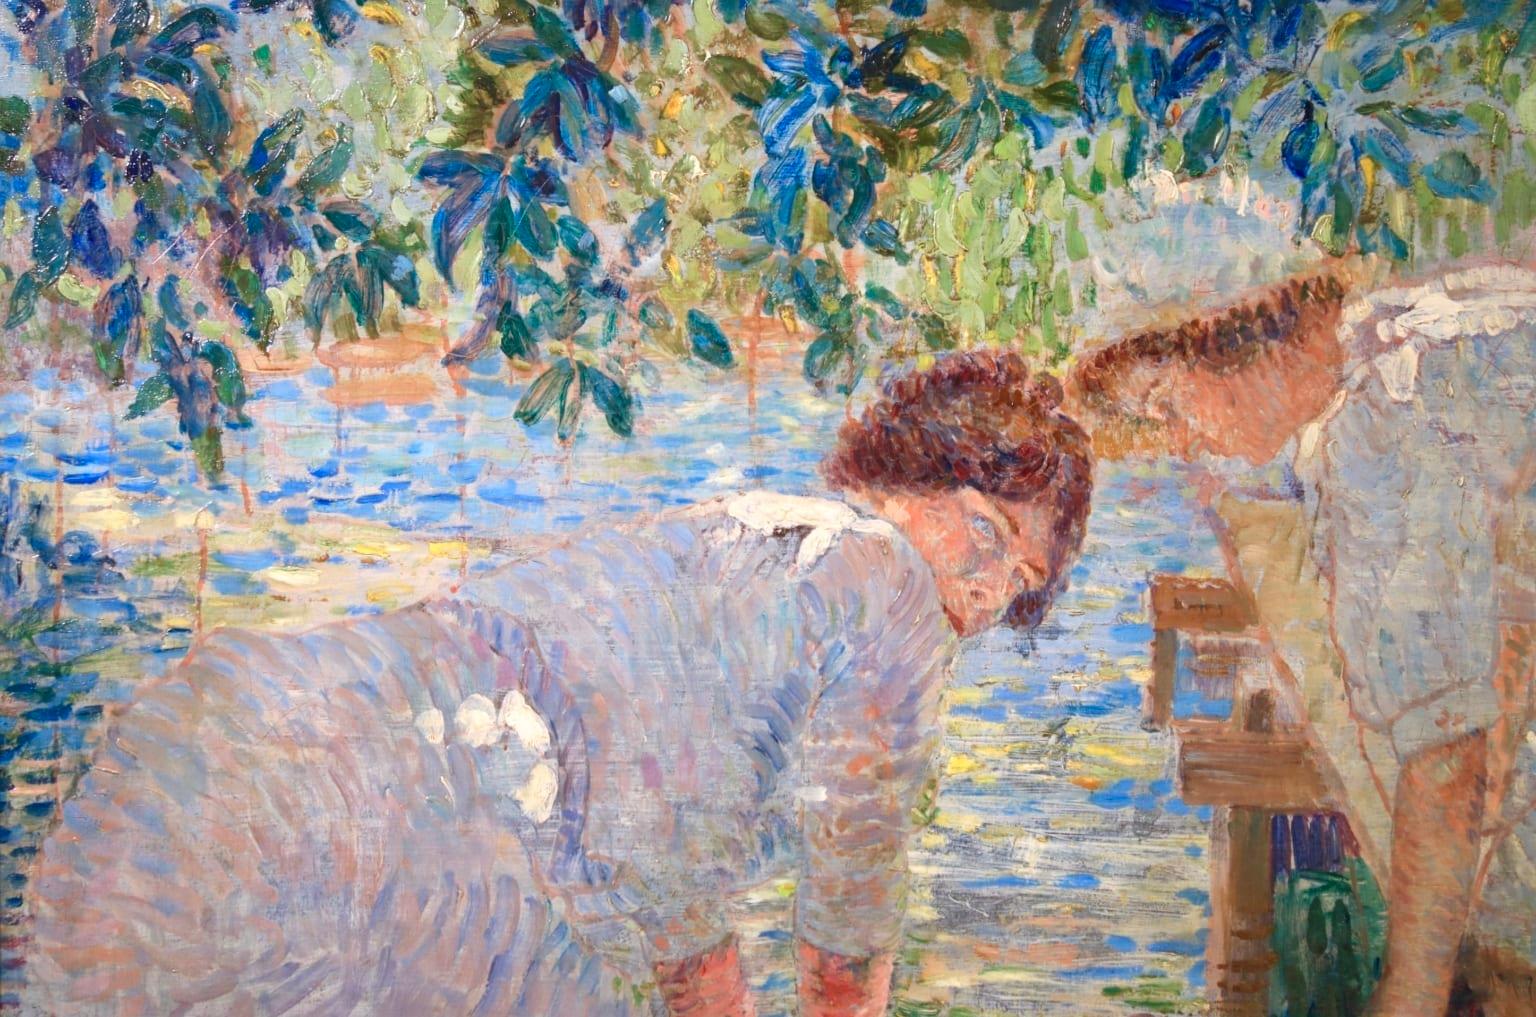 Lavandieres - Impressionist Oil, Women by River in Landscape by Paul Villiers 5